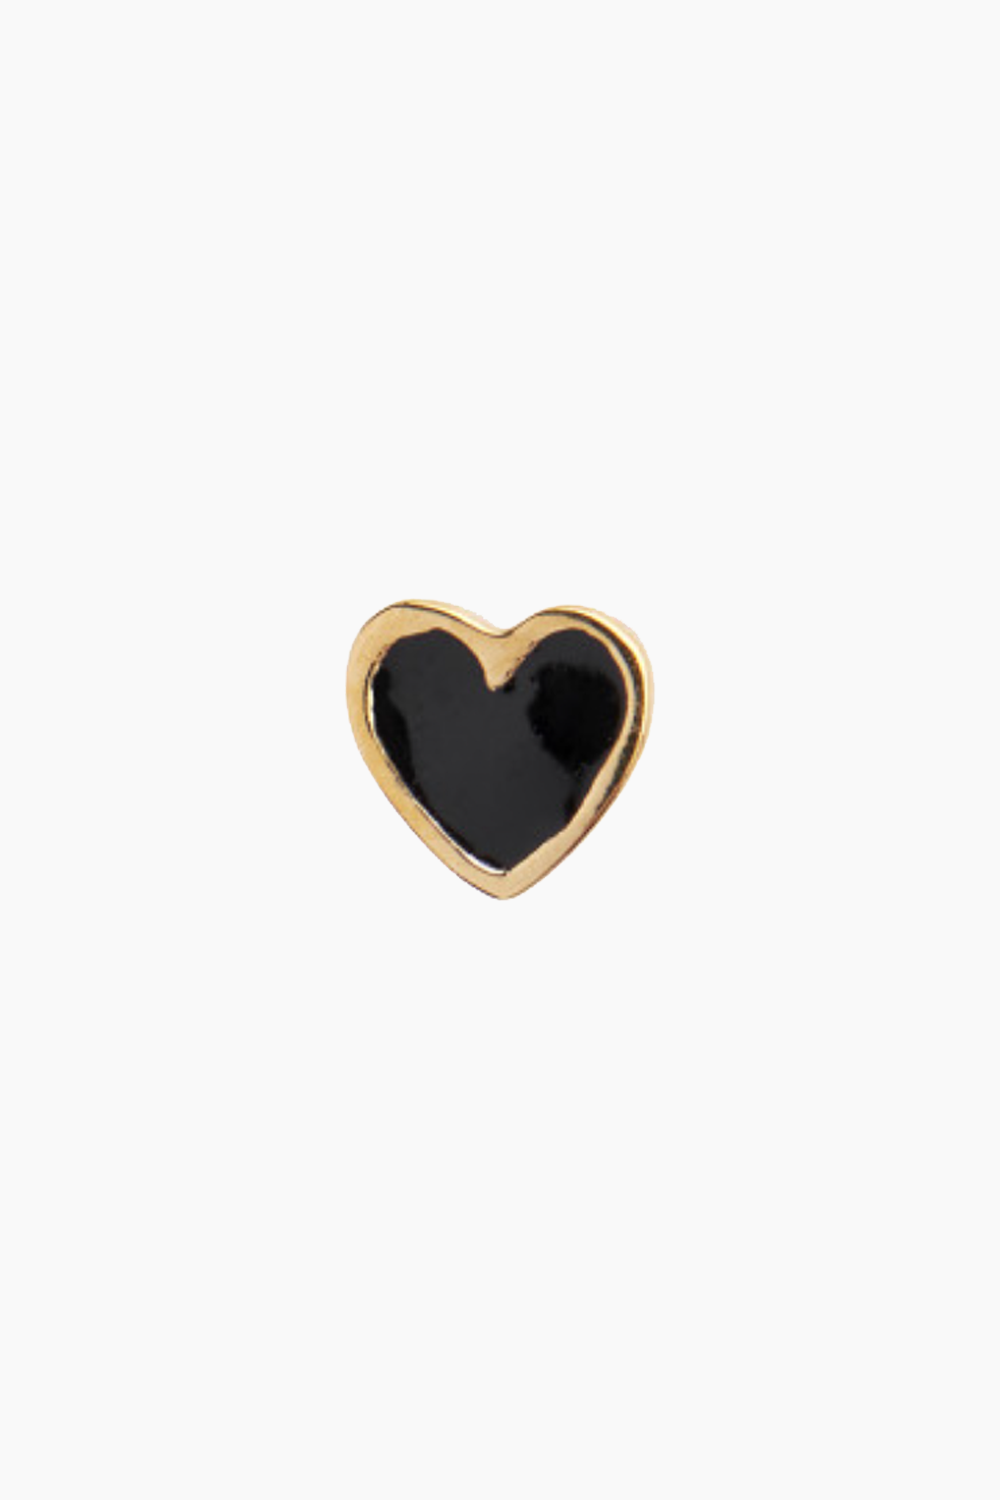 Petit Love Heart - Black Enamel - Gold - Stine A